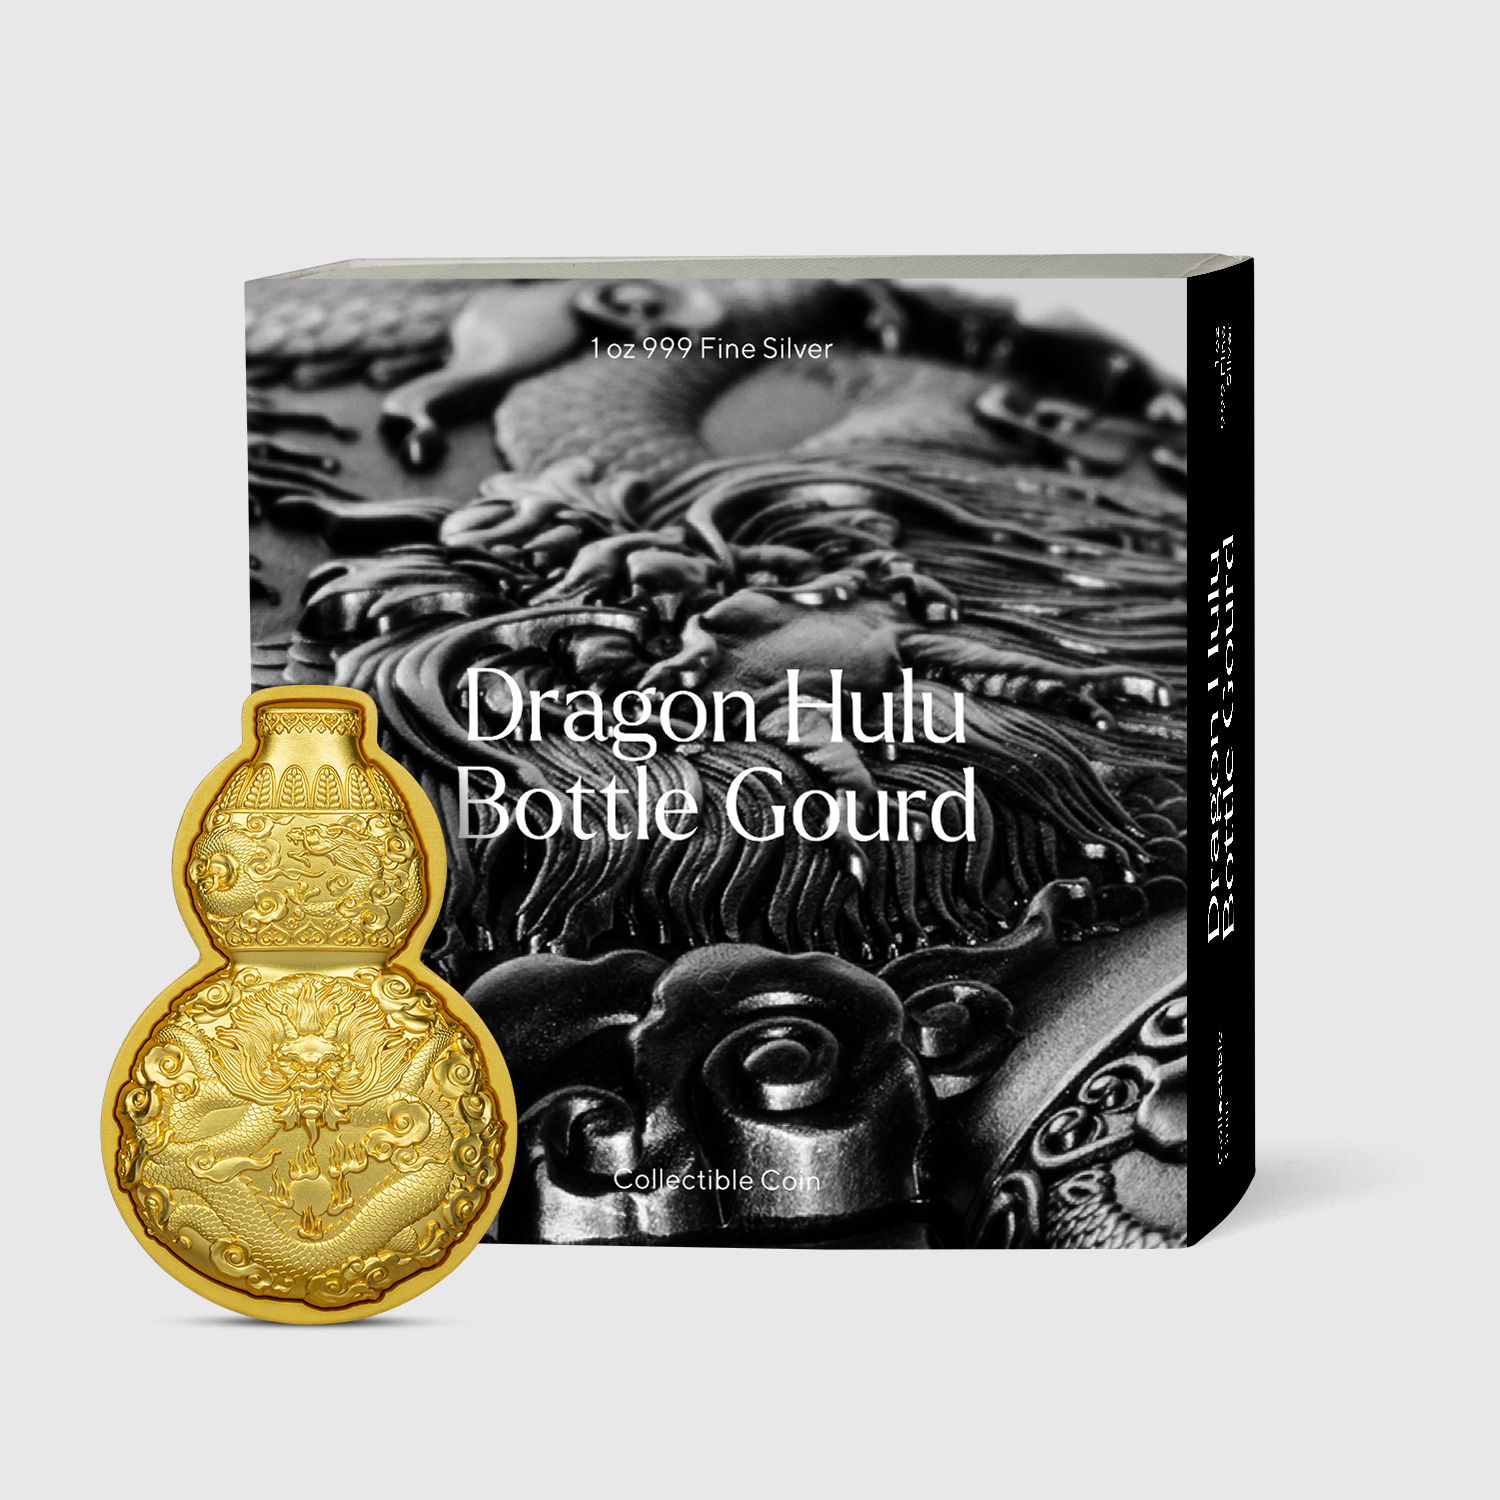 2023 Dragon Hulu Bottle Gourd Gold Gilded 1oz Silver Coin Packaging.jpg